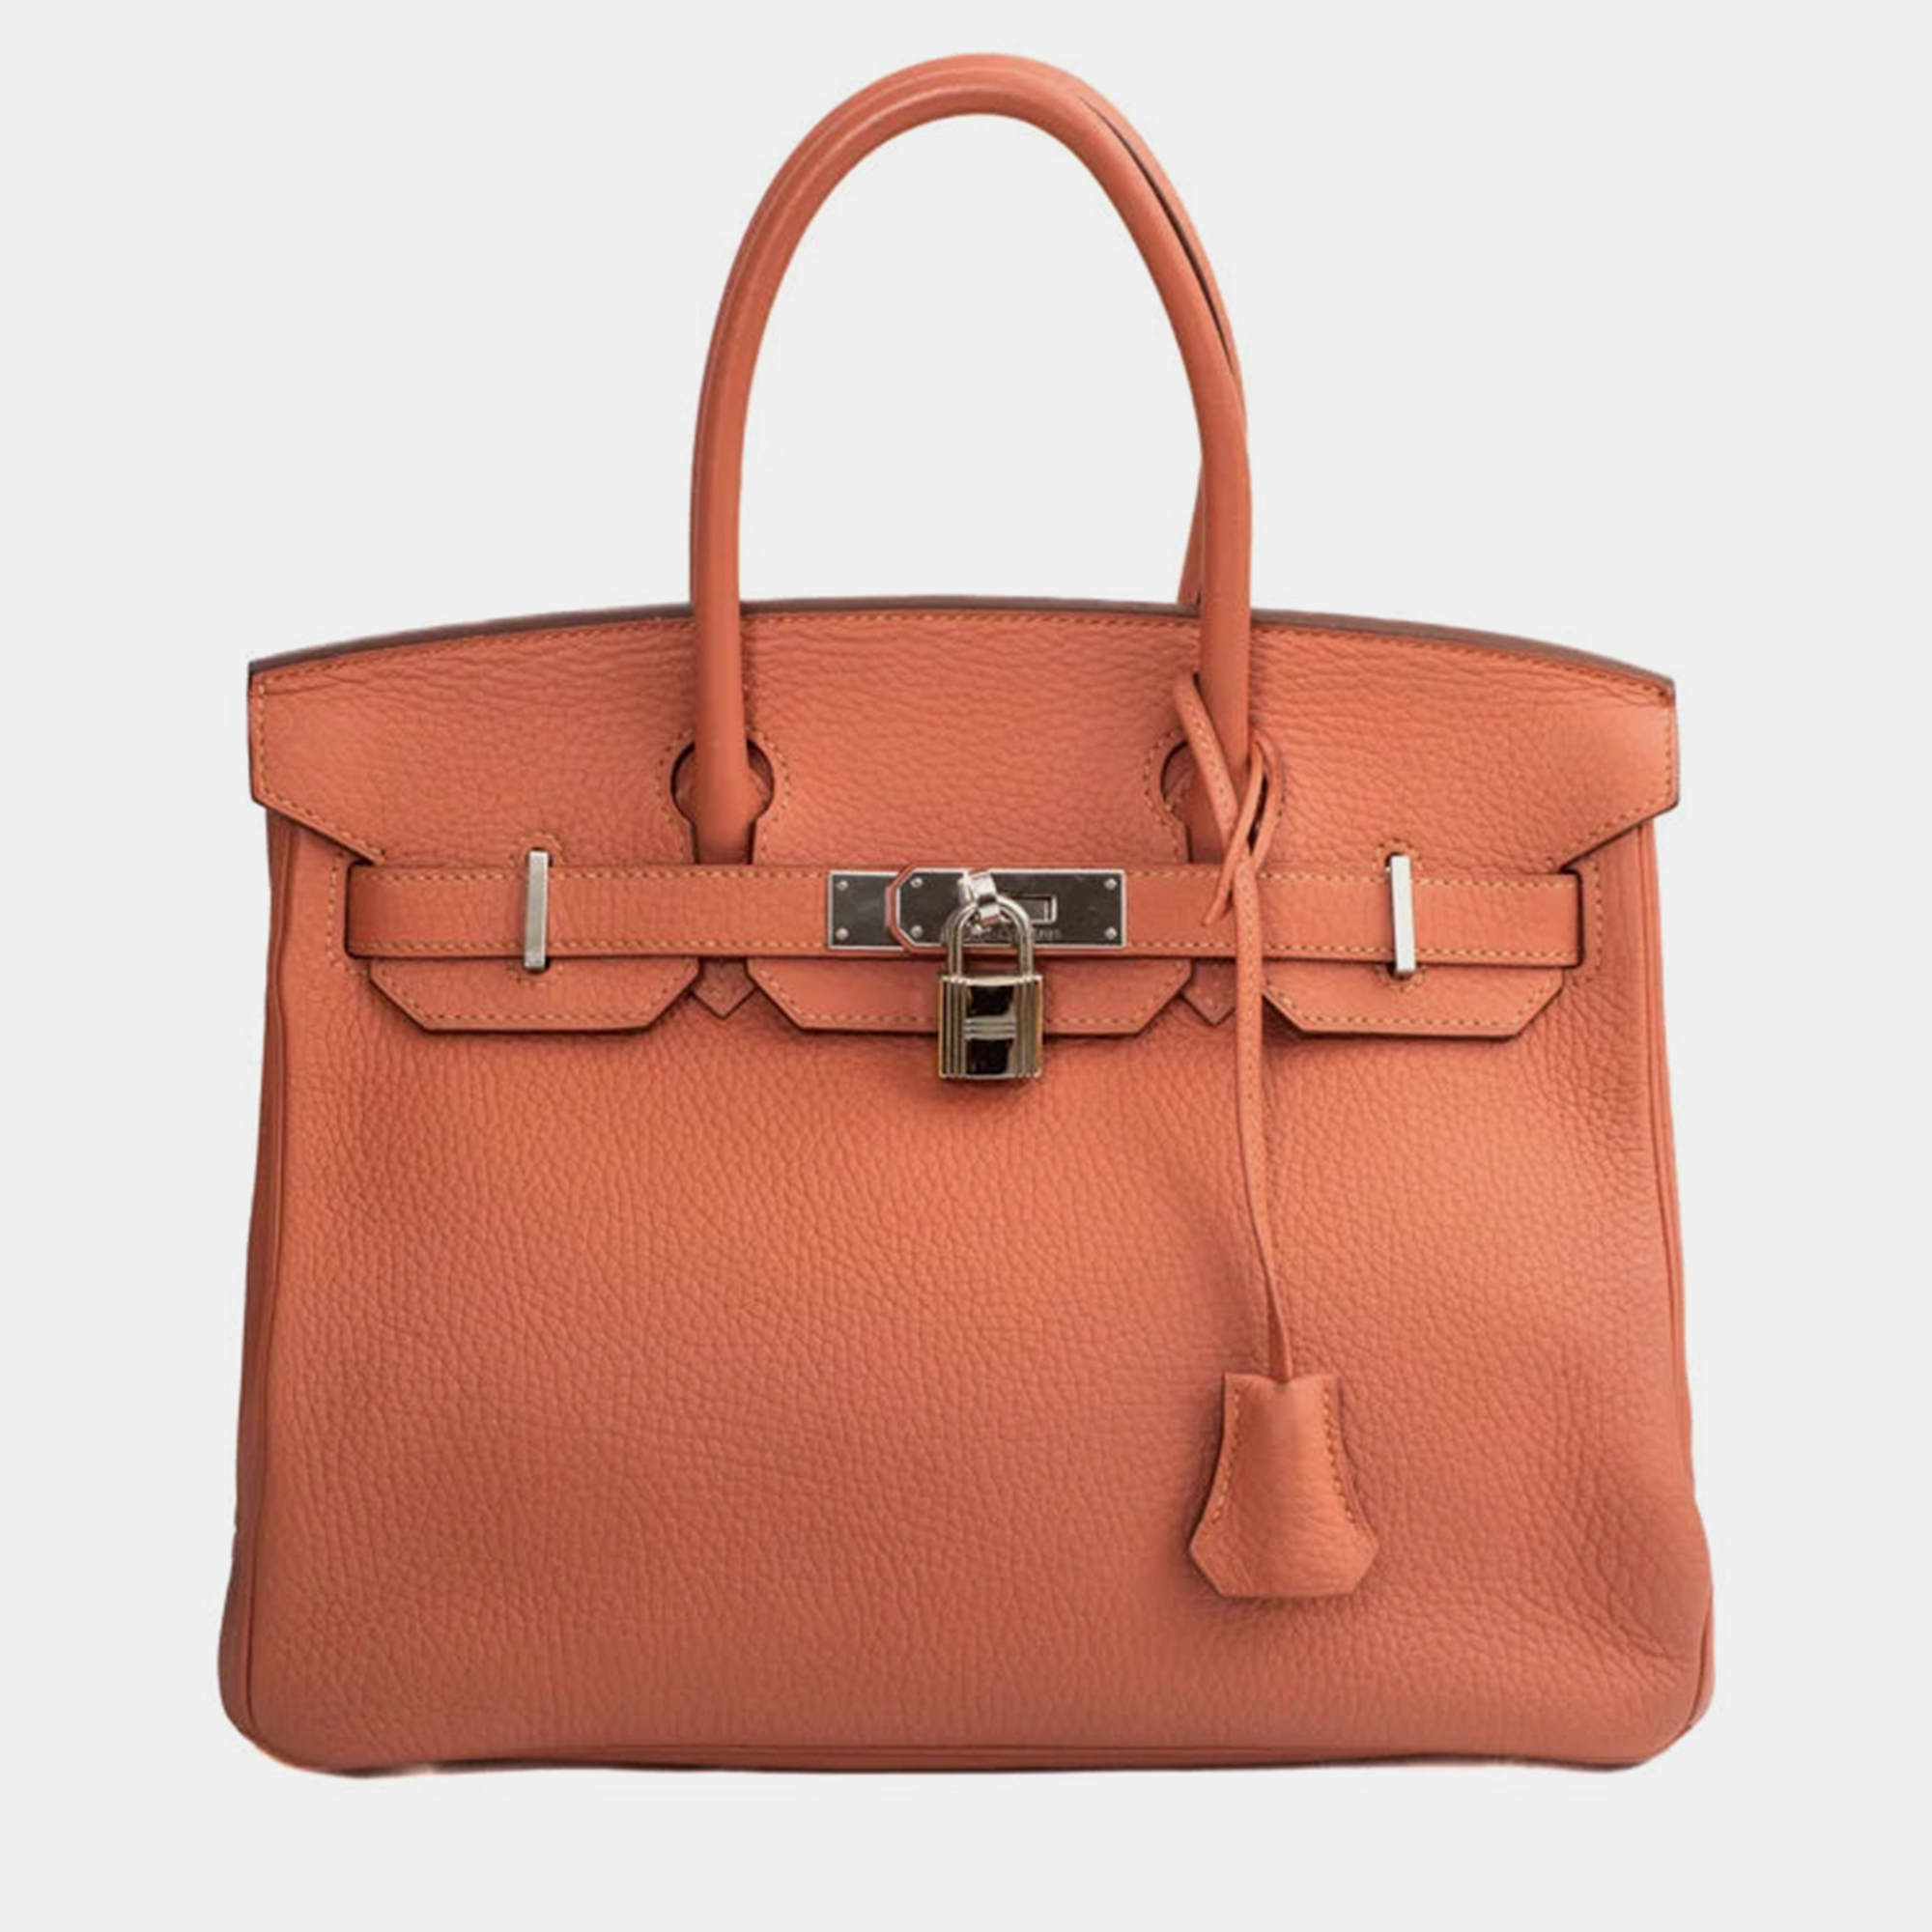 Pre-owned Hermes Pink Leather Birkin 30 Bag